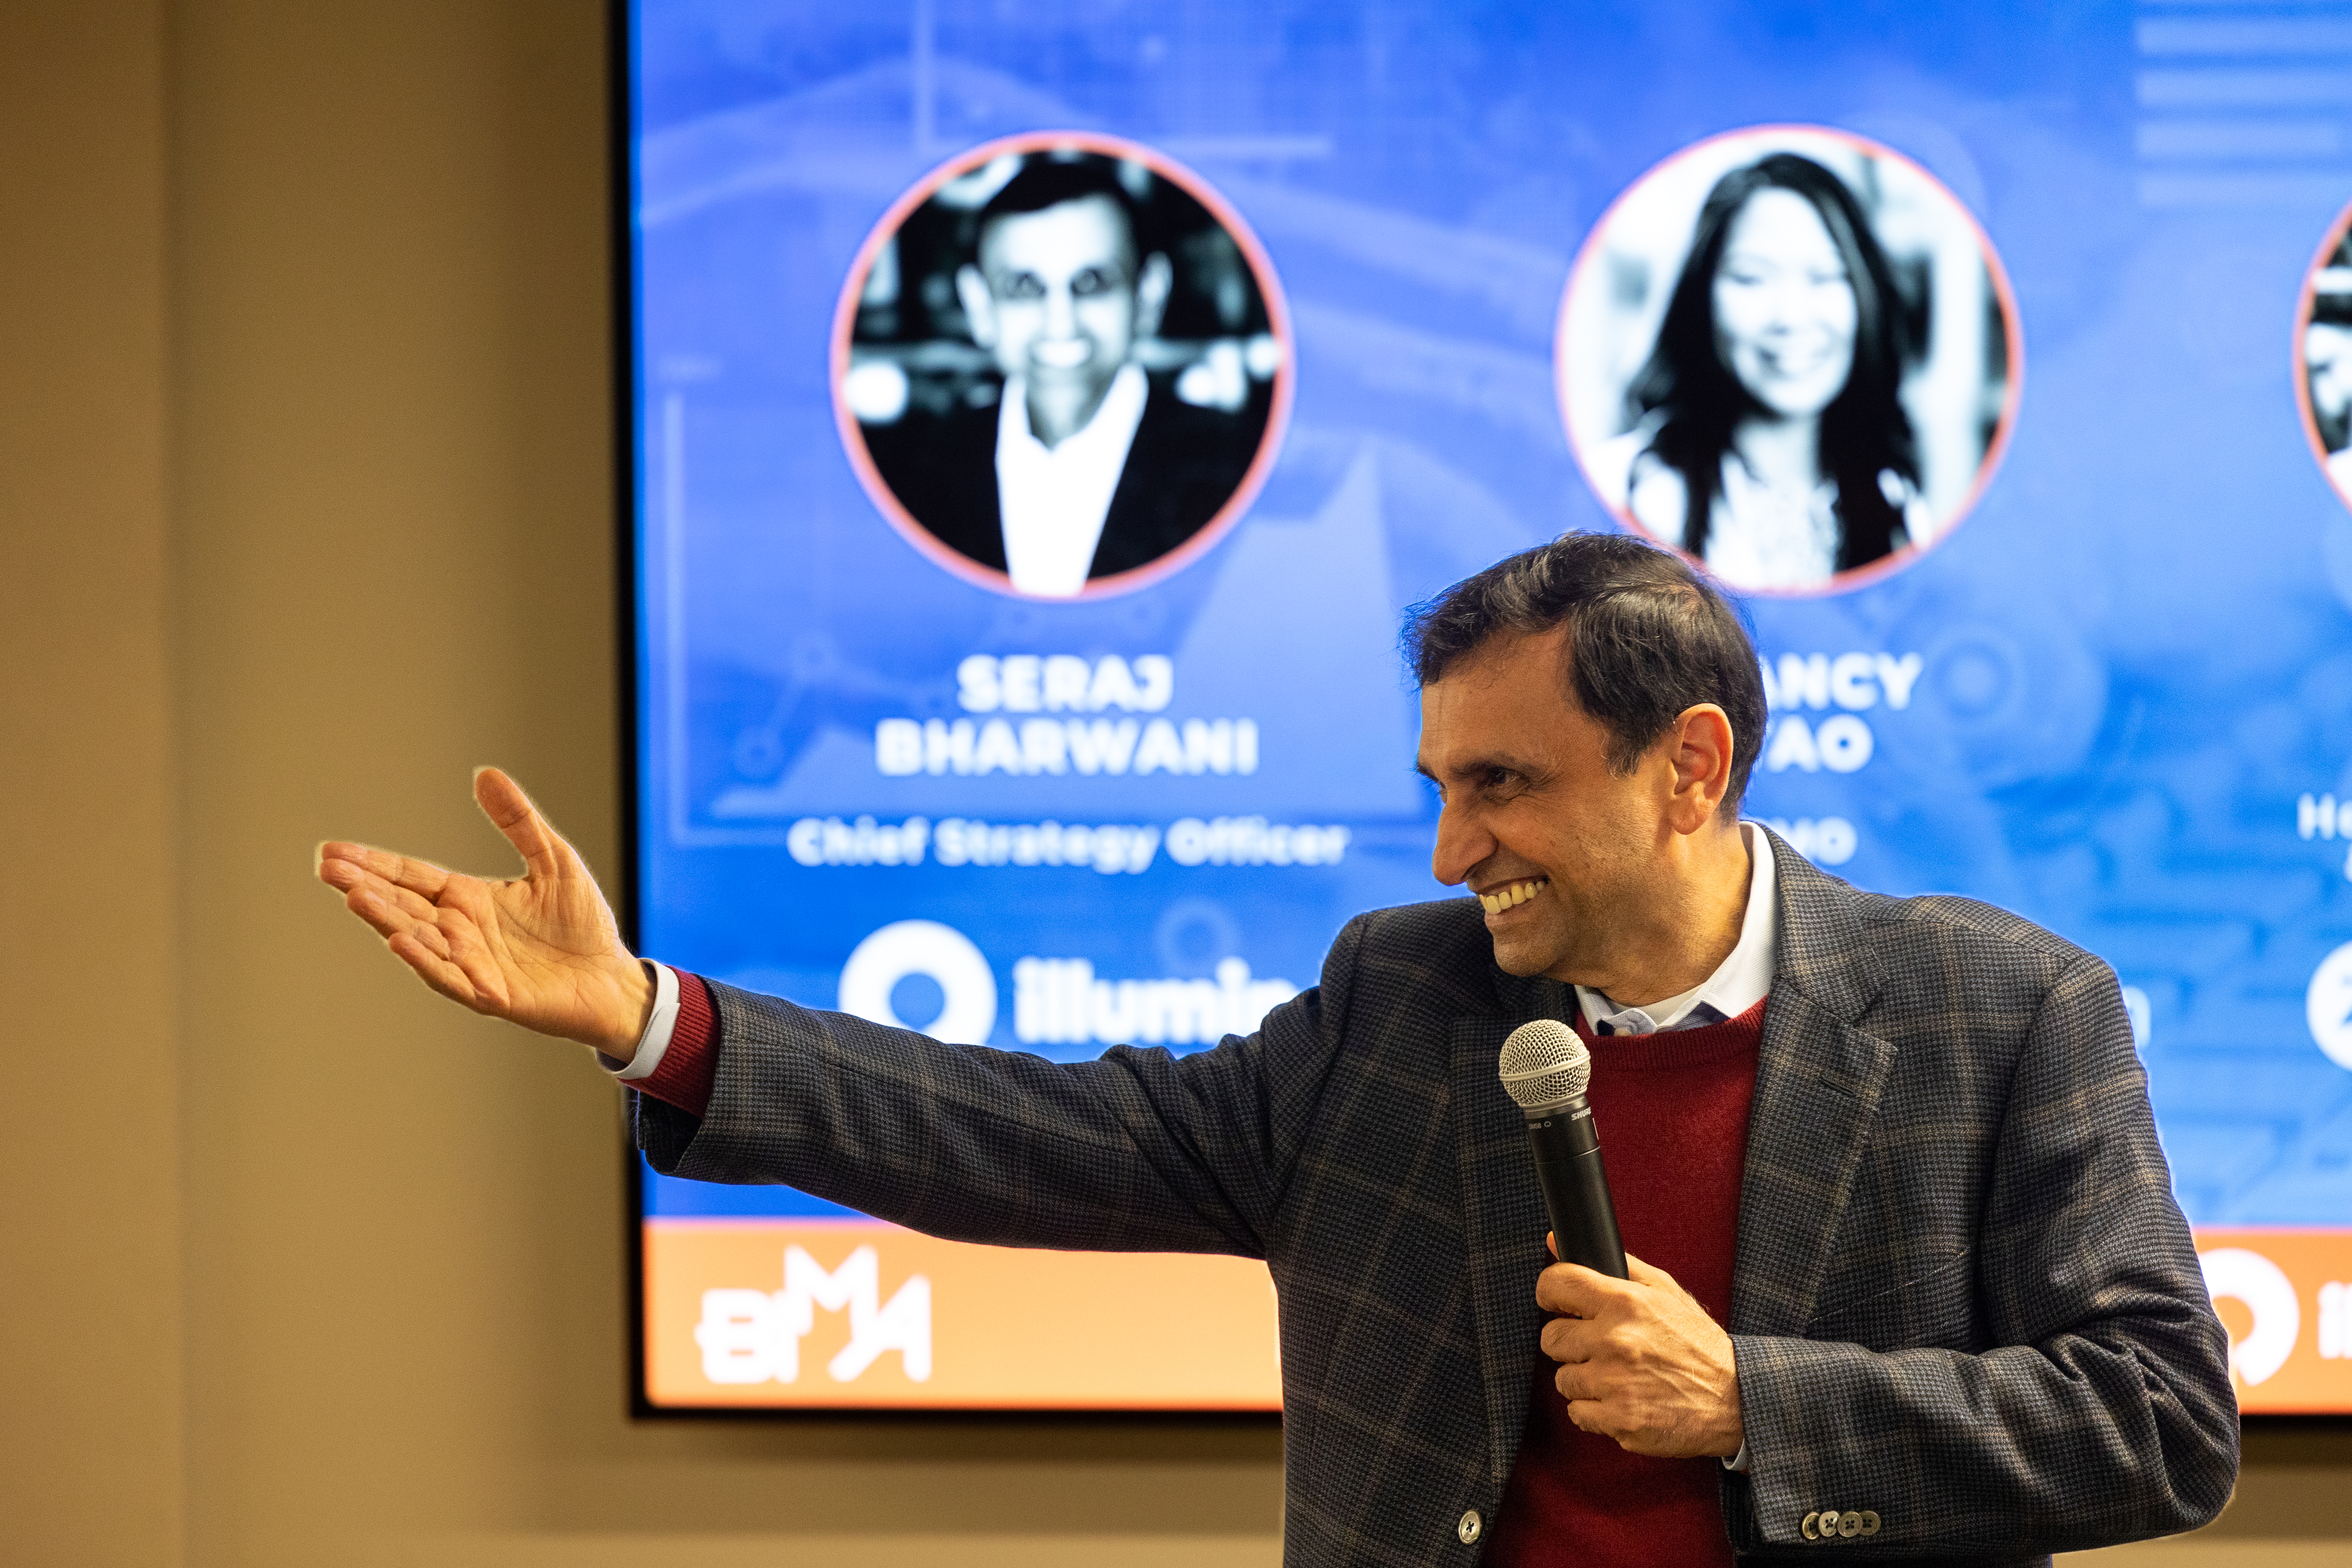 Seraj Bharwani at BIMA: CMO year in review 2024